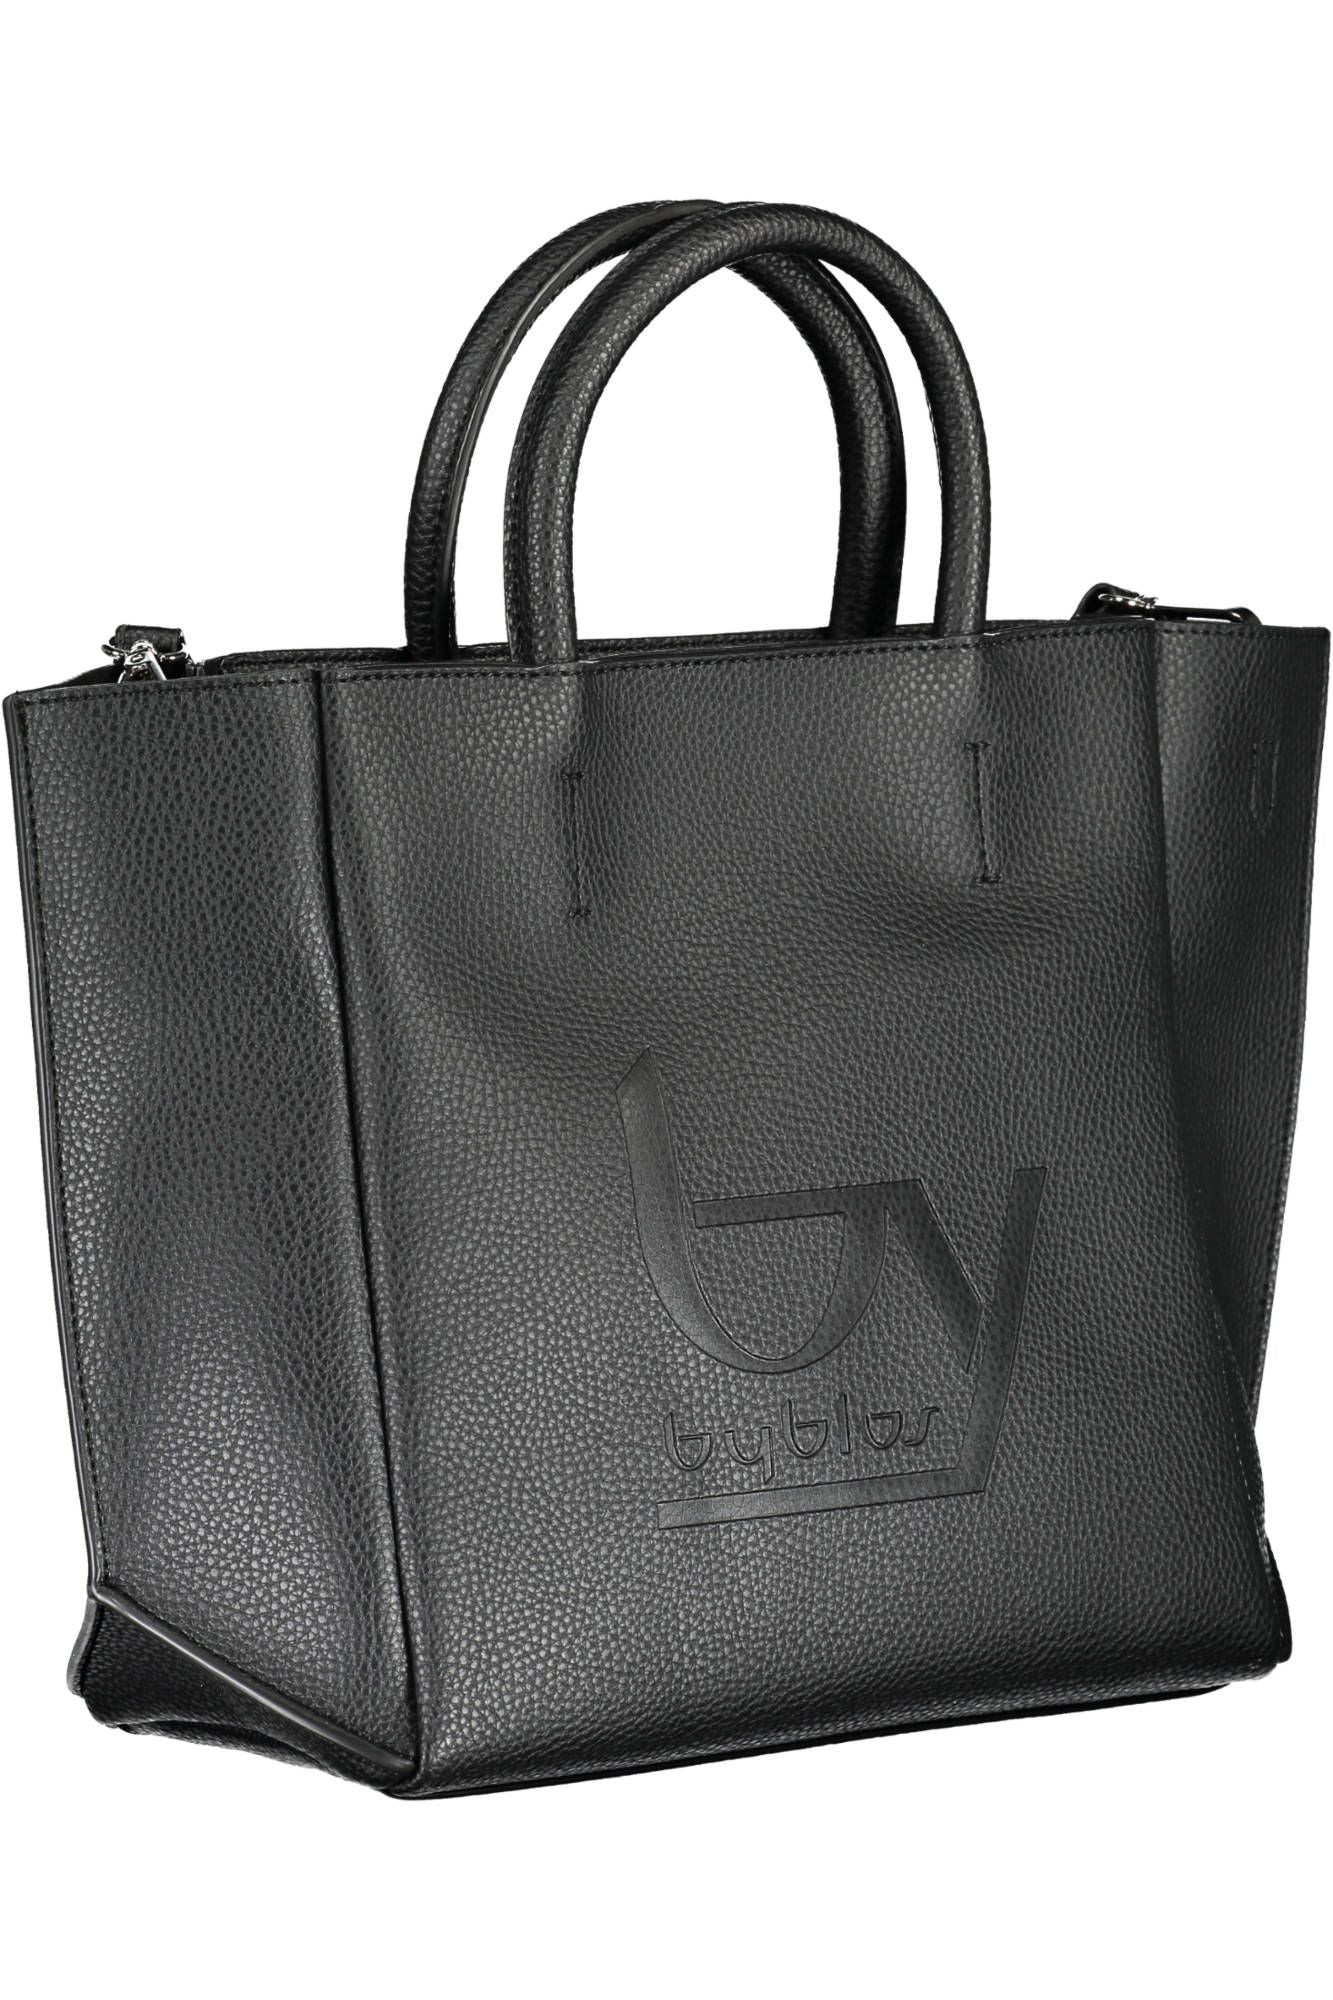 Elegant Black Handbag with Chic Print